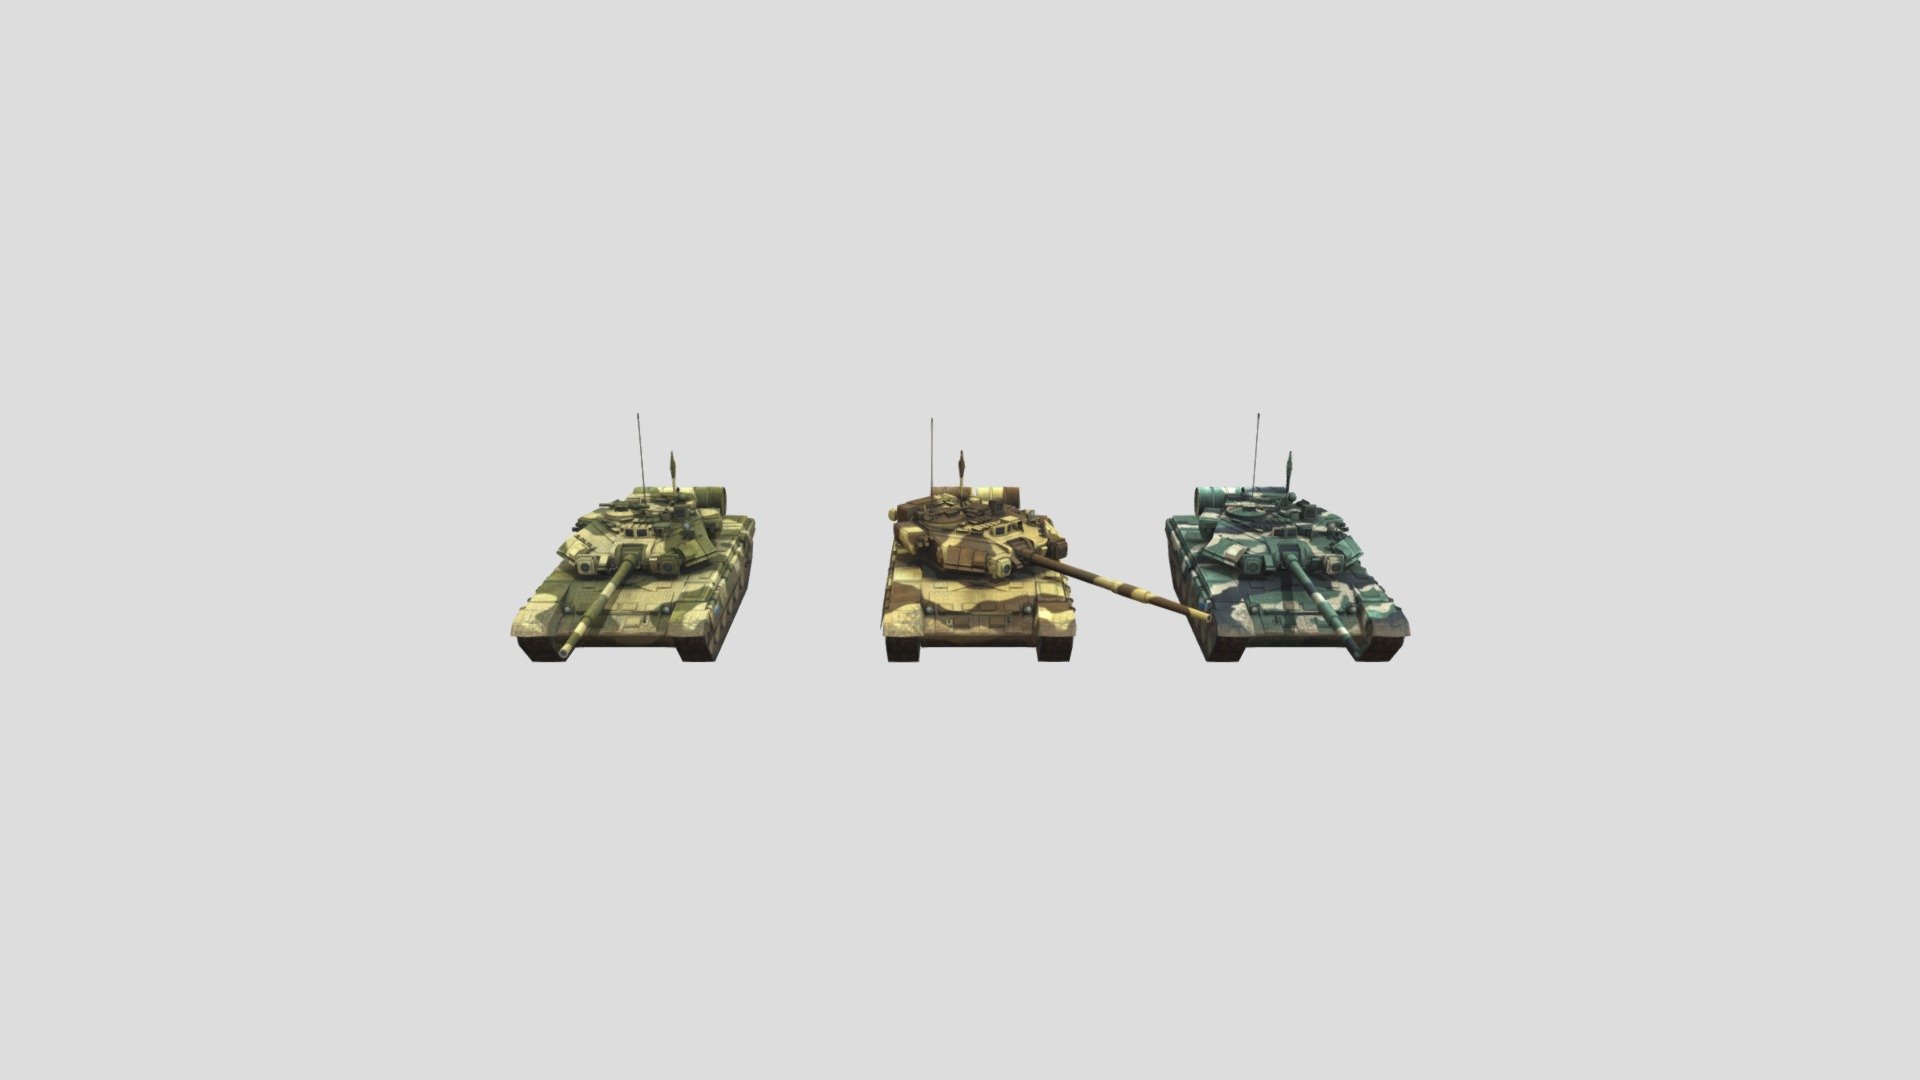 T-90 Tank - Tanque T-90 Ruso
Vehículo militar
Carro armado
Atención: Las orugas no se mueven. Las ruedas no giran
Attention: The caterpillars do not move. The wheels don't turn - T-90 Tank - Tanque T-90 Ruso - Download Free 3D model by Marianito 3d model